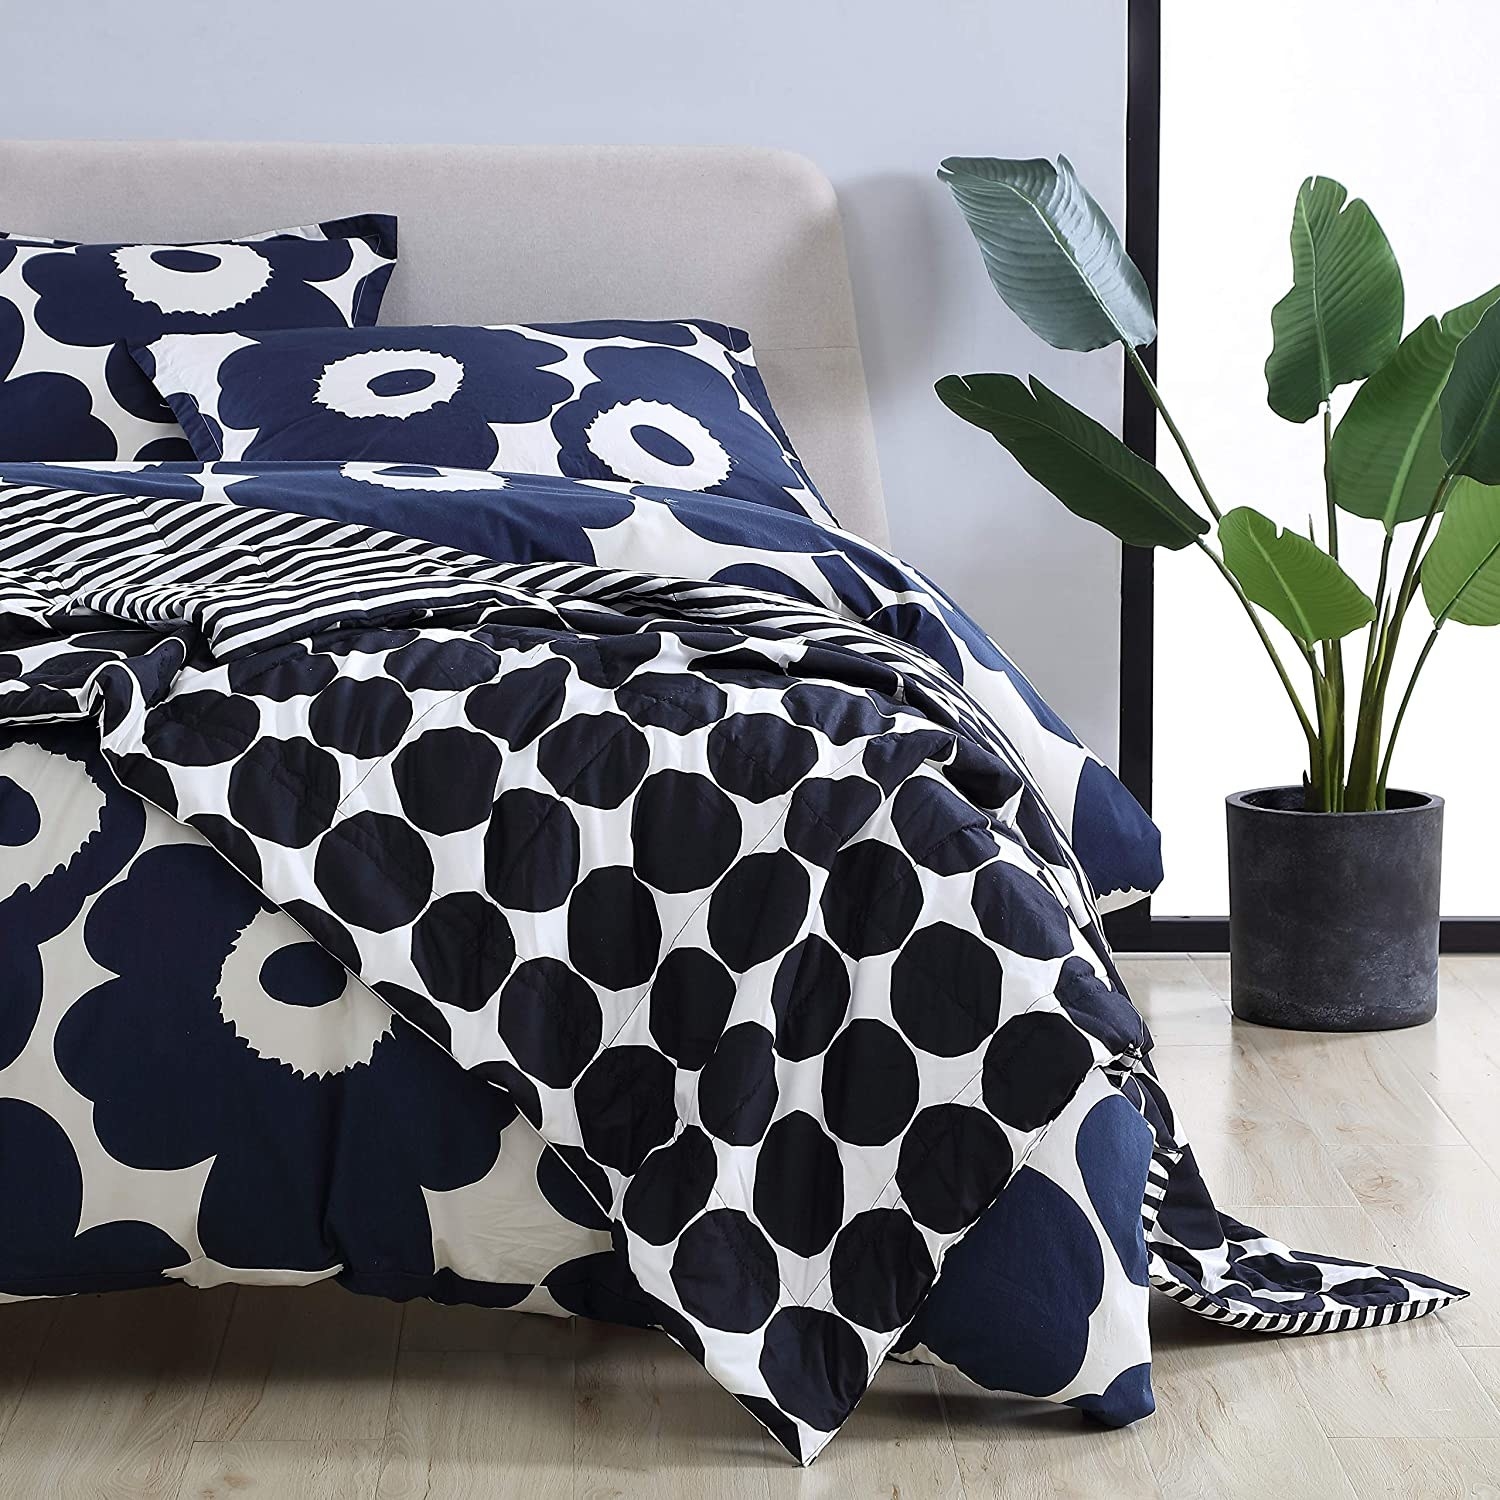 A Marimekko quilt draped over a large bed